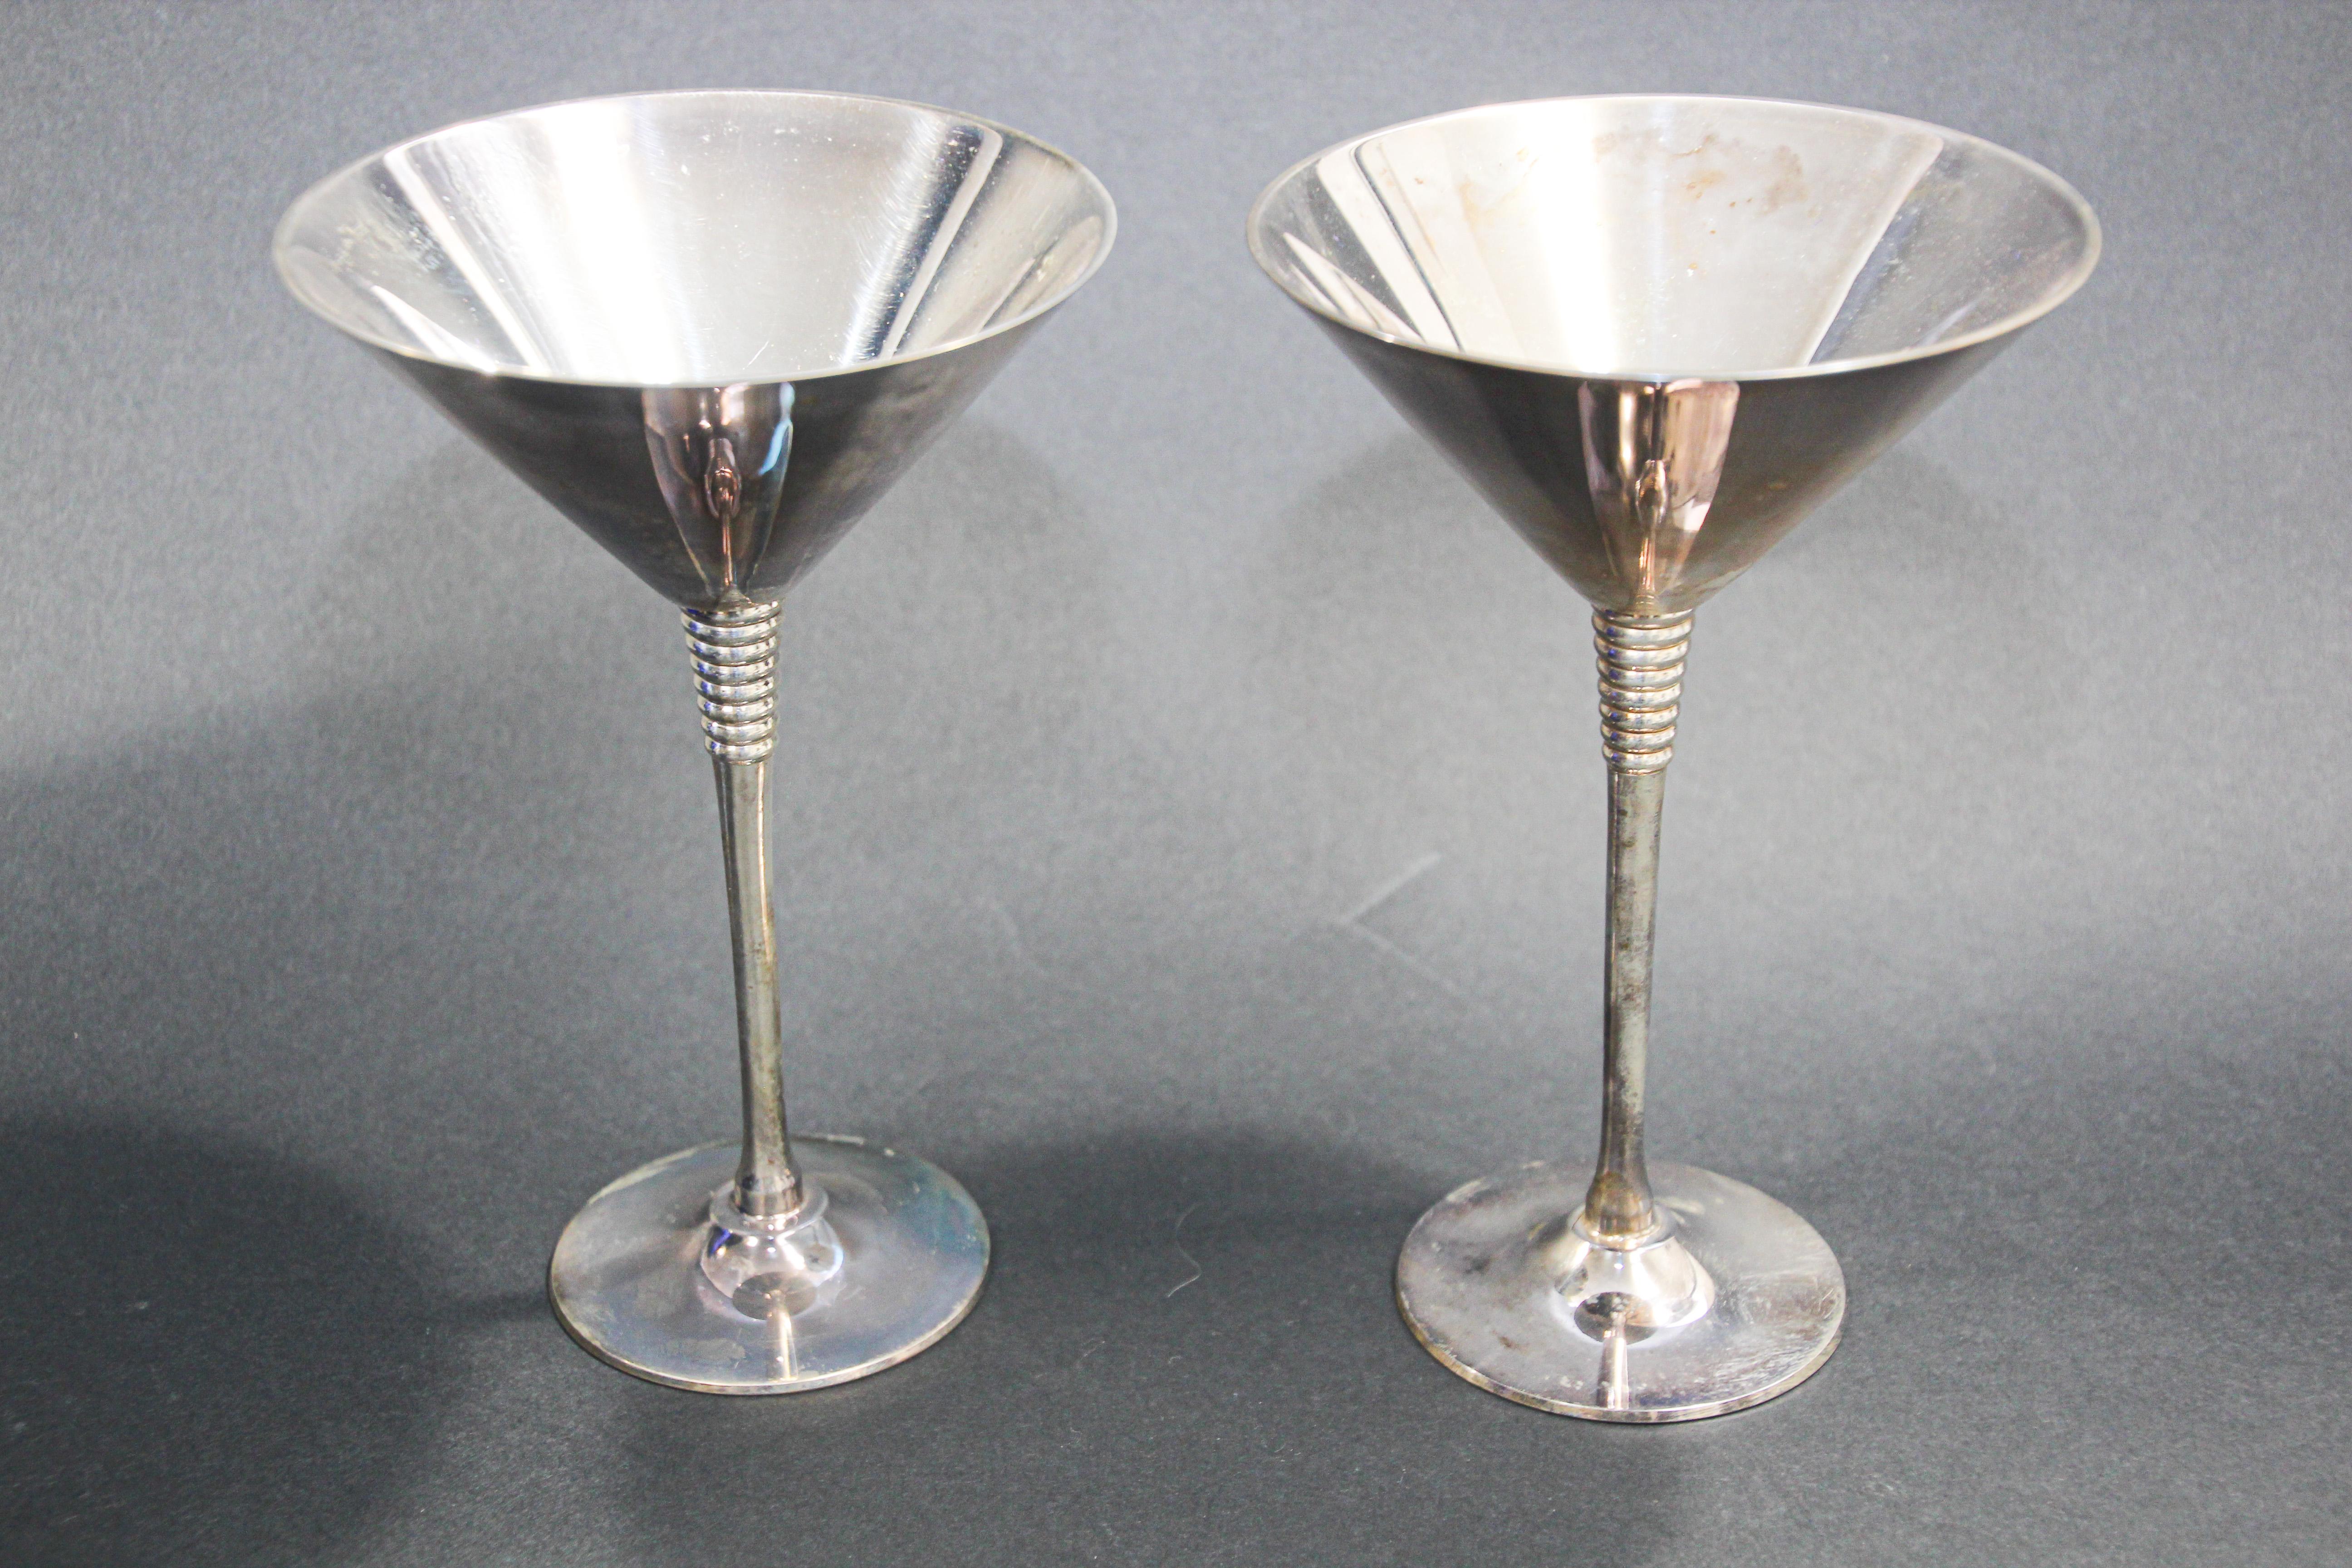 Silver Plate Collectible Martini Glasses from the Flamingo Las Vegas Casino